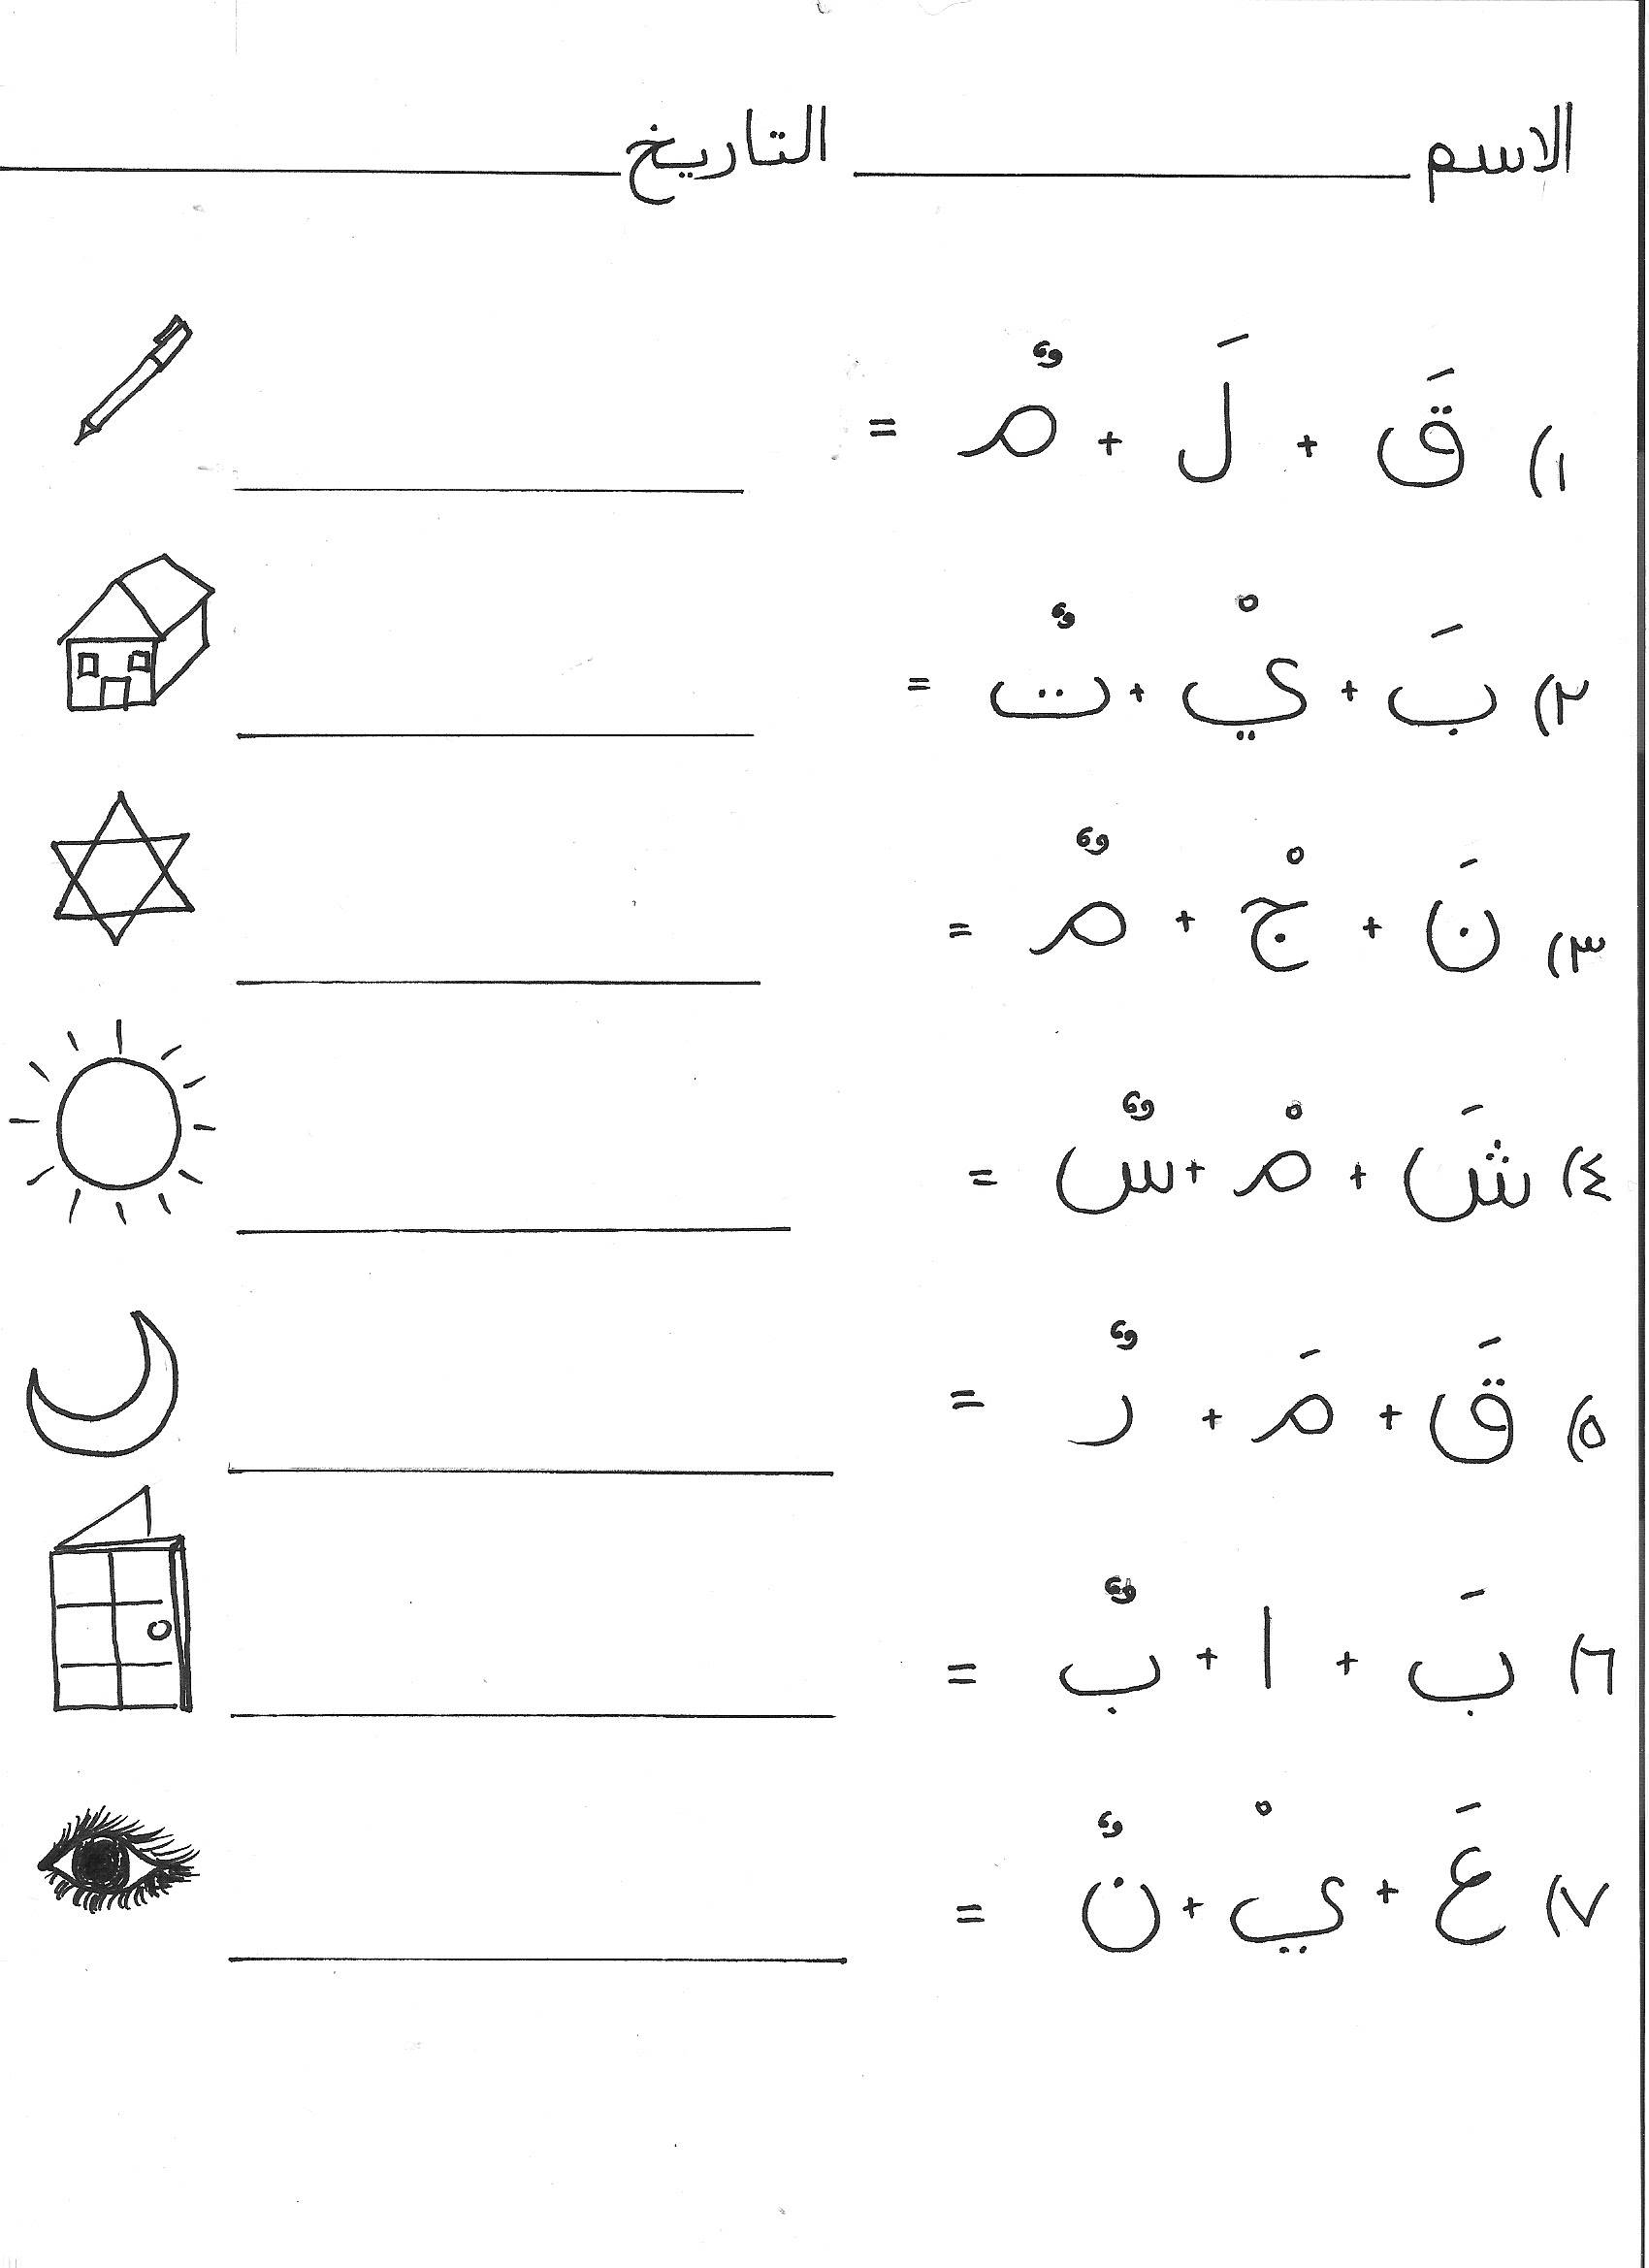 9 Best Images Of Arabic Alphabet Writing Worksheets Arabic Alphabet Letters Worksheets Arabic